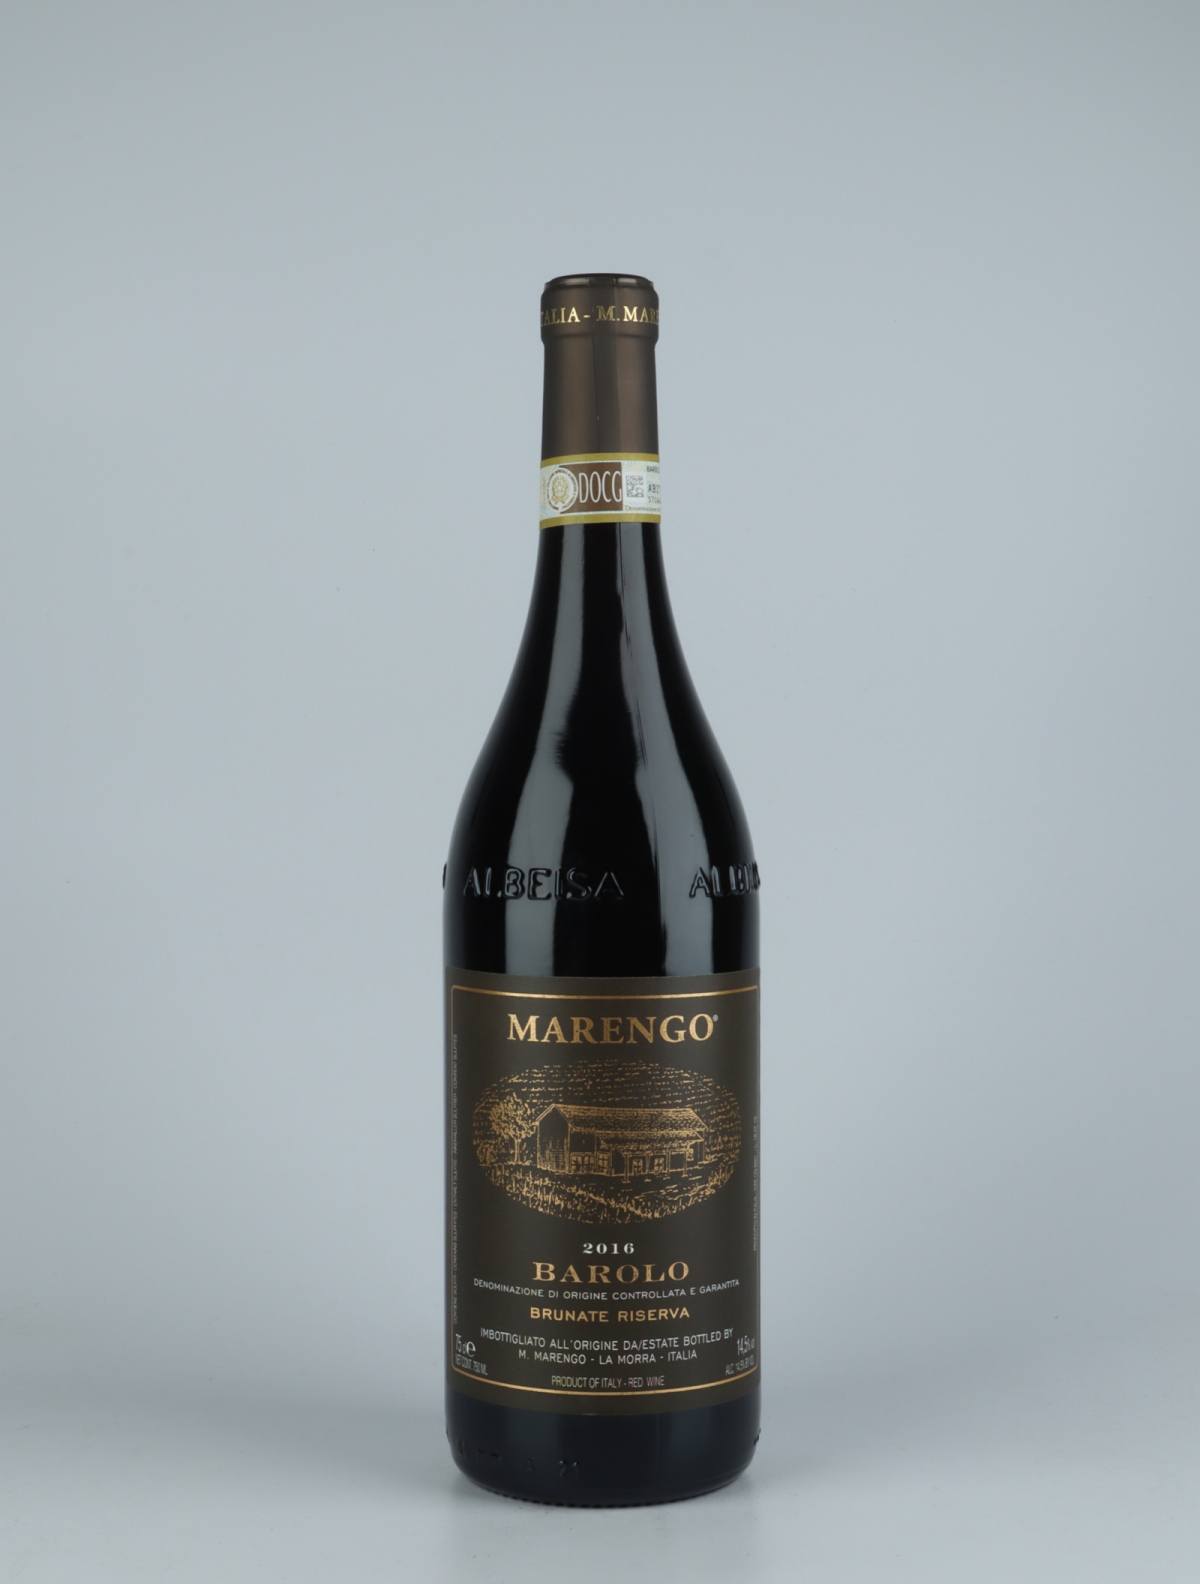 En flaske 2016 Barolo - Brunate Riserva Rødvin fra Mario Marengo, Piemonte i Italien